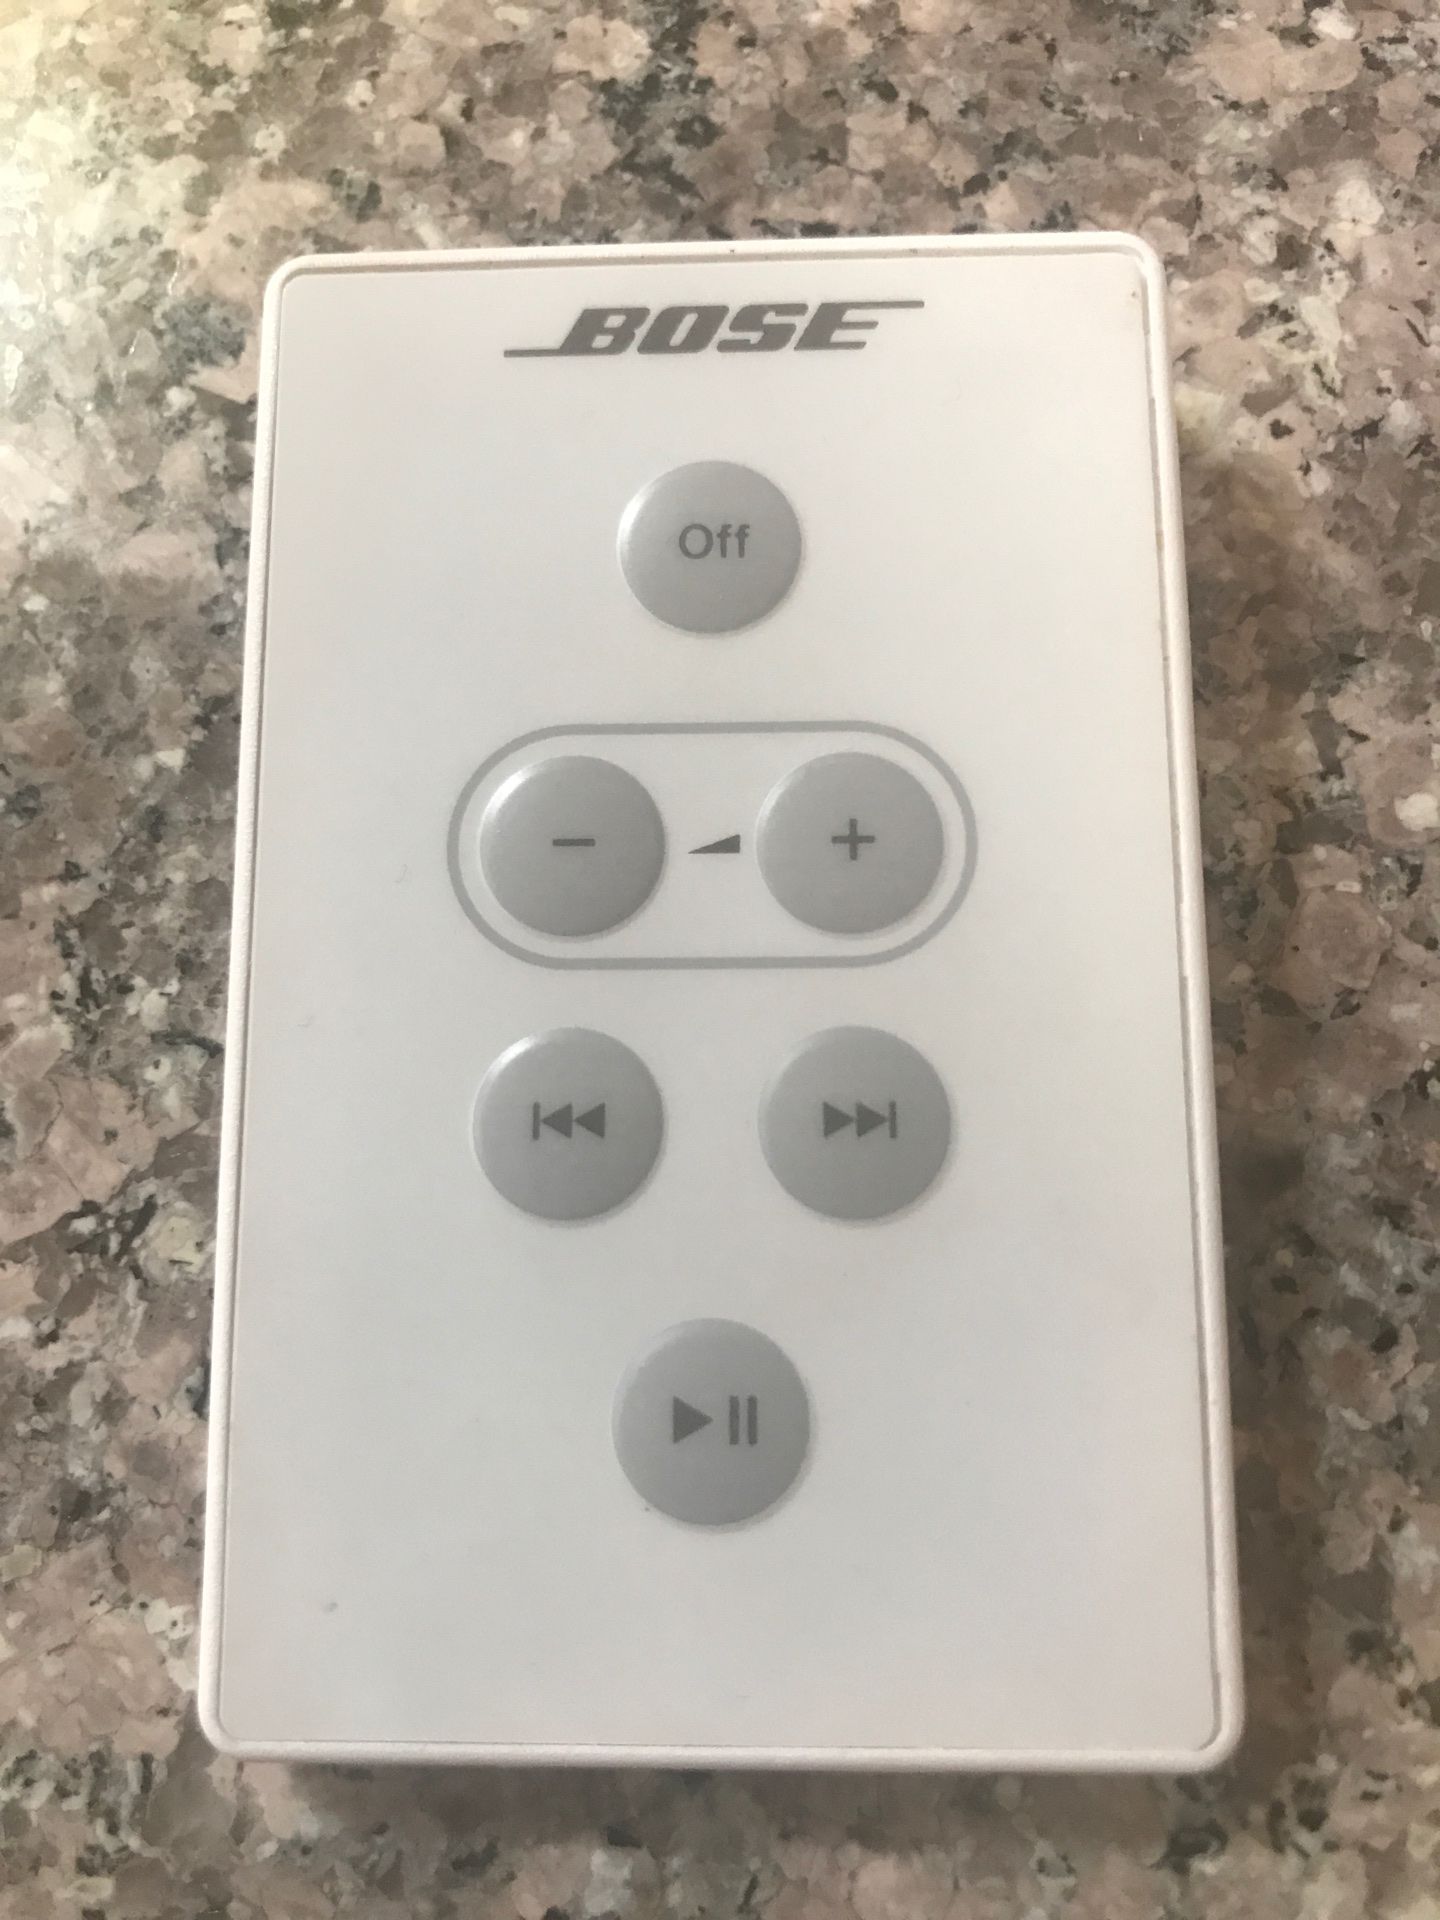 Original bose sounddock series 1 remote control used